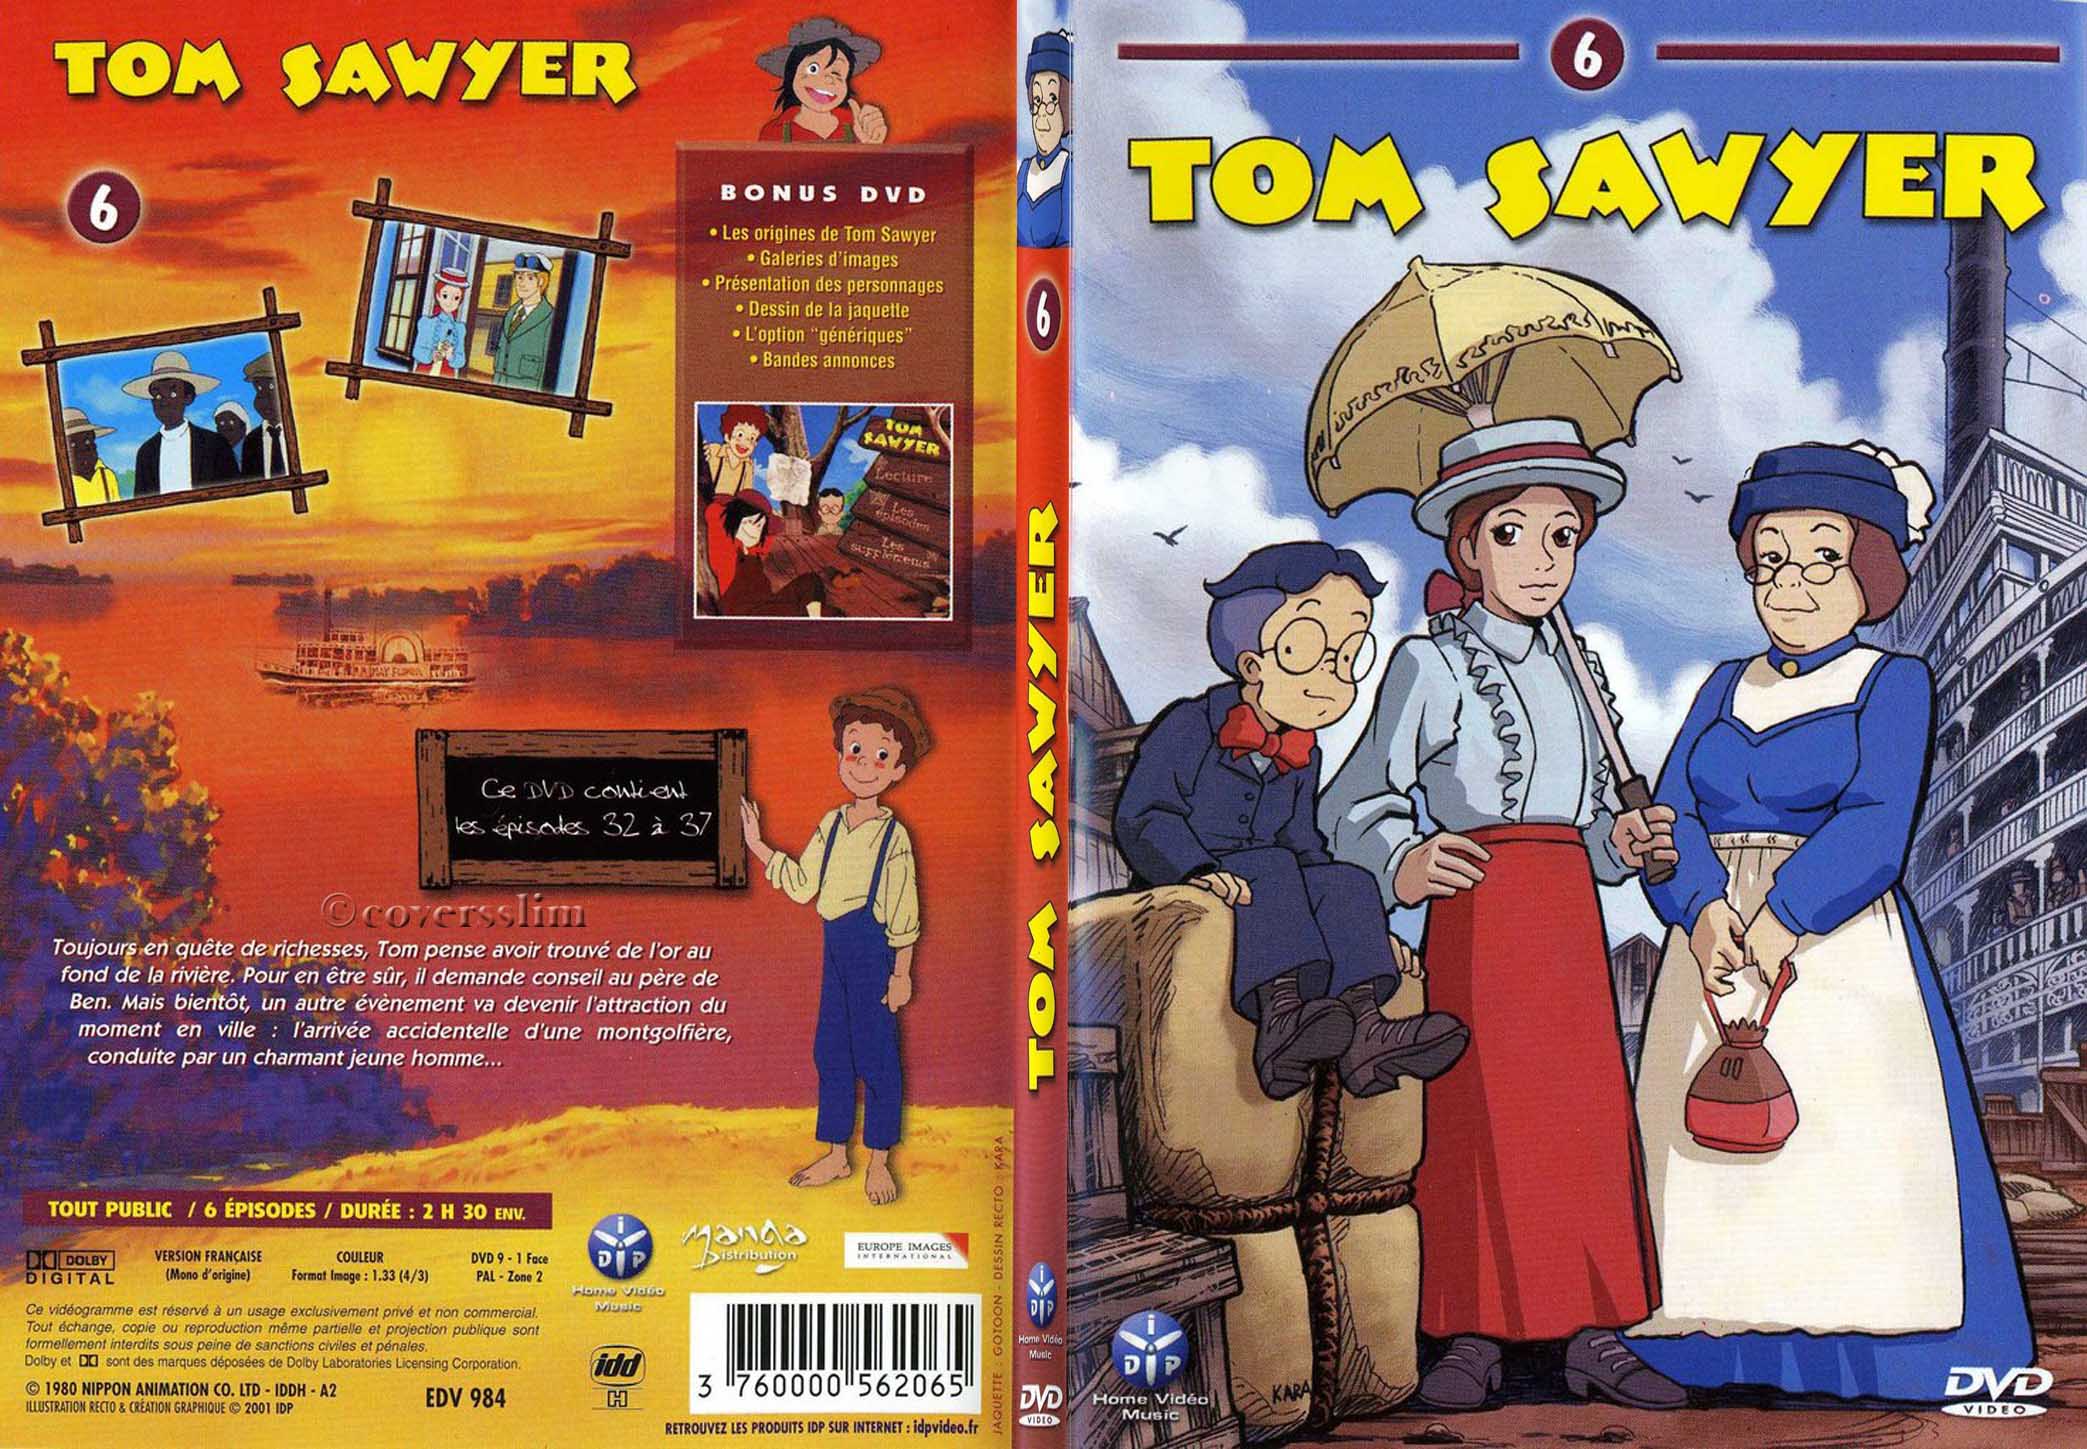 Jaquette DVD Tom Sawyer vol 6 - SLIM